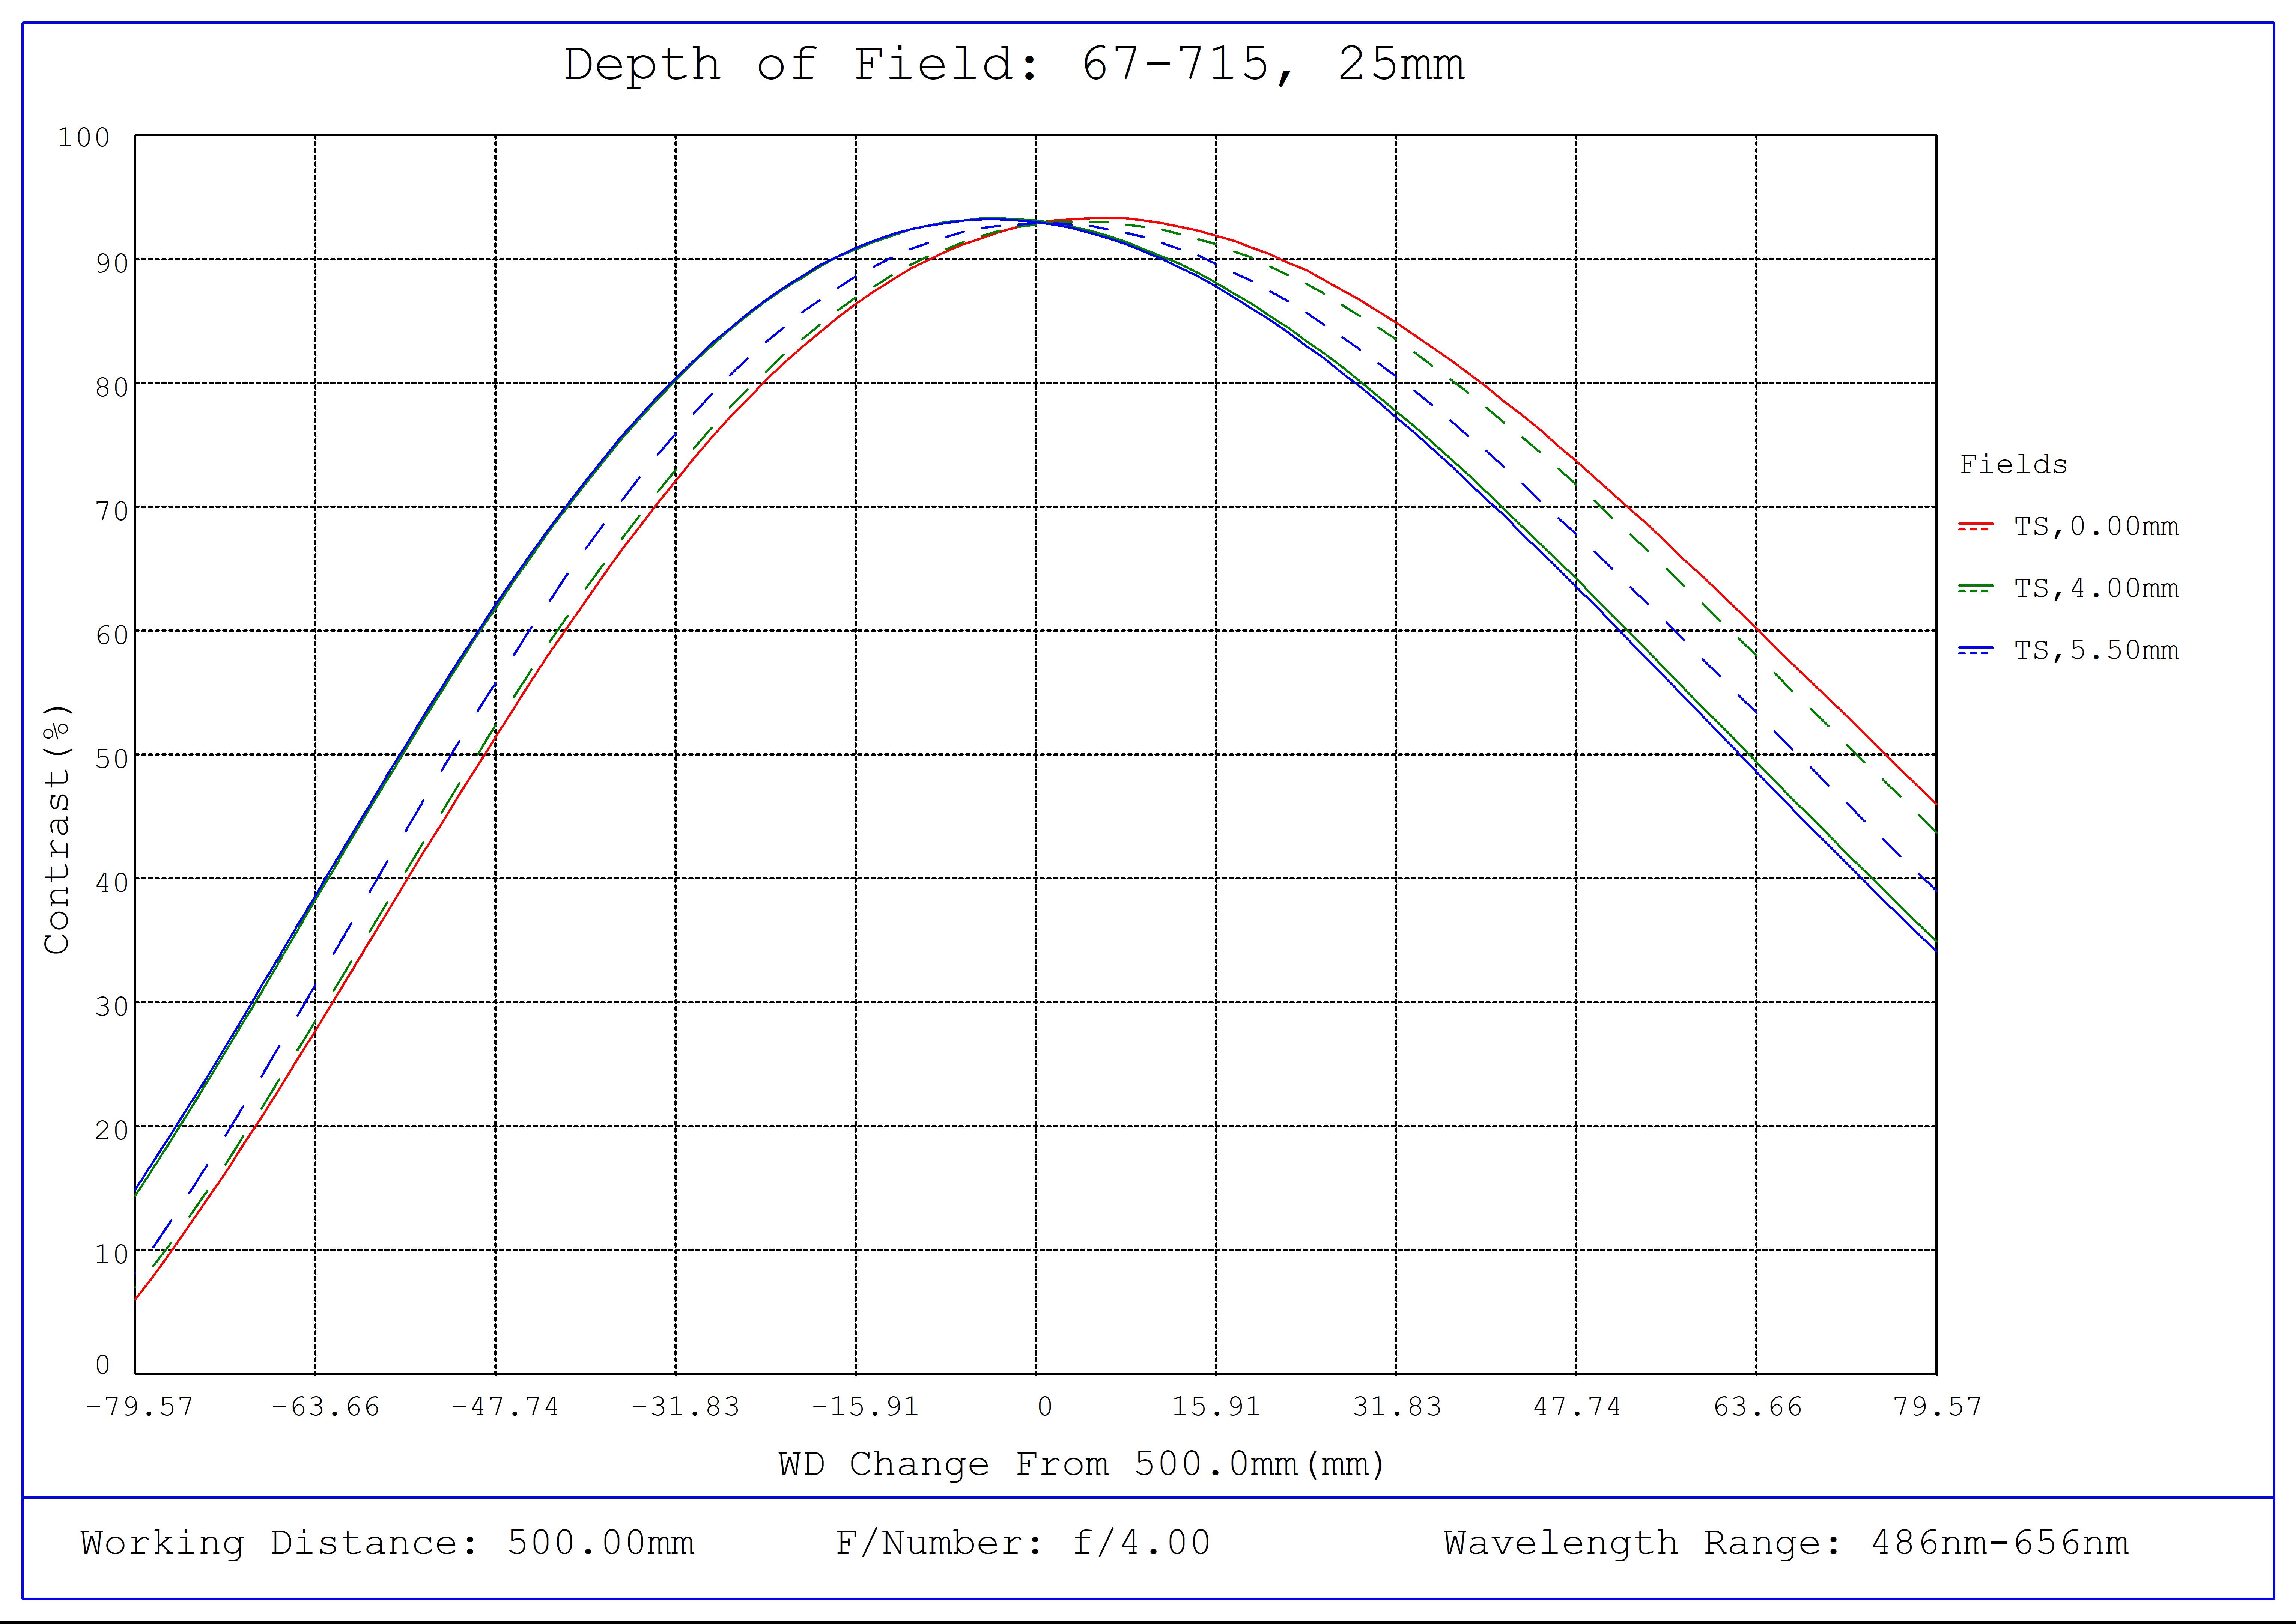 #67-715, 25mm C VIS-NIR Series Fixed Focal Length Lens, Depth of Field Plot, 500mm Working Distance, f4